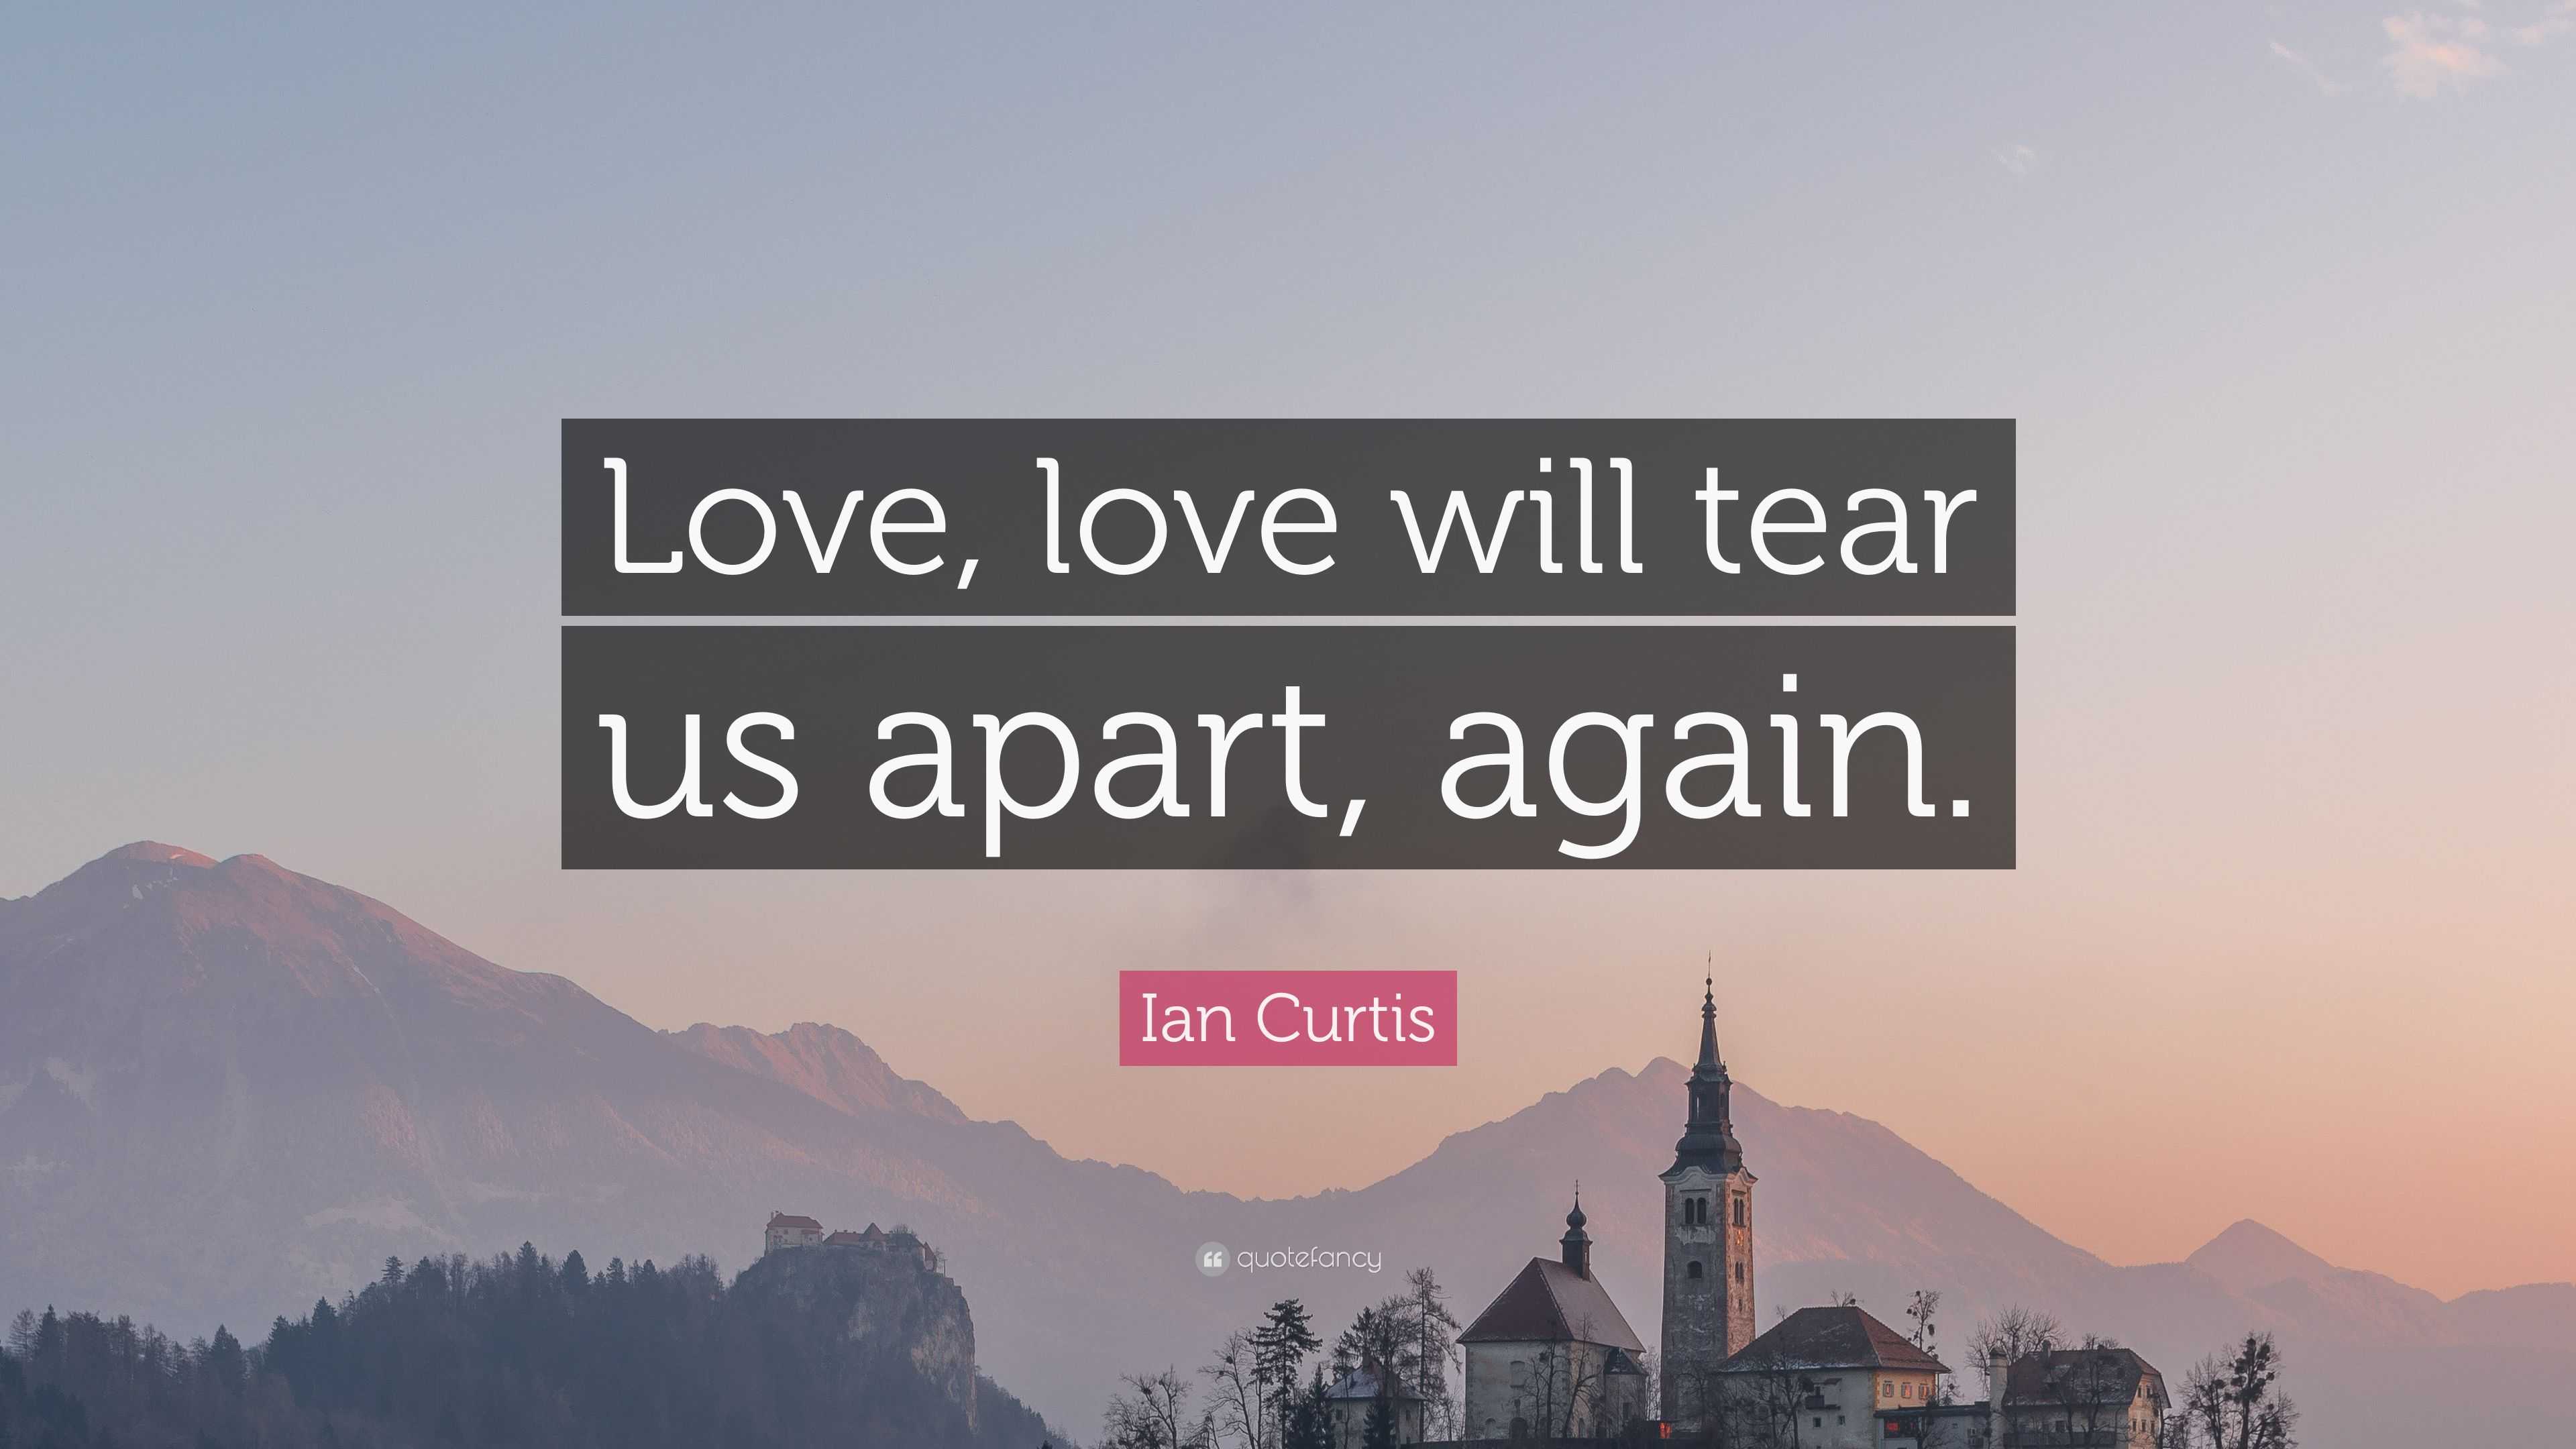 Ian Curtis Quote “Love love will tear us apart again ”